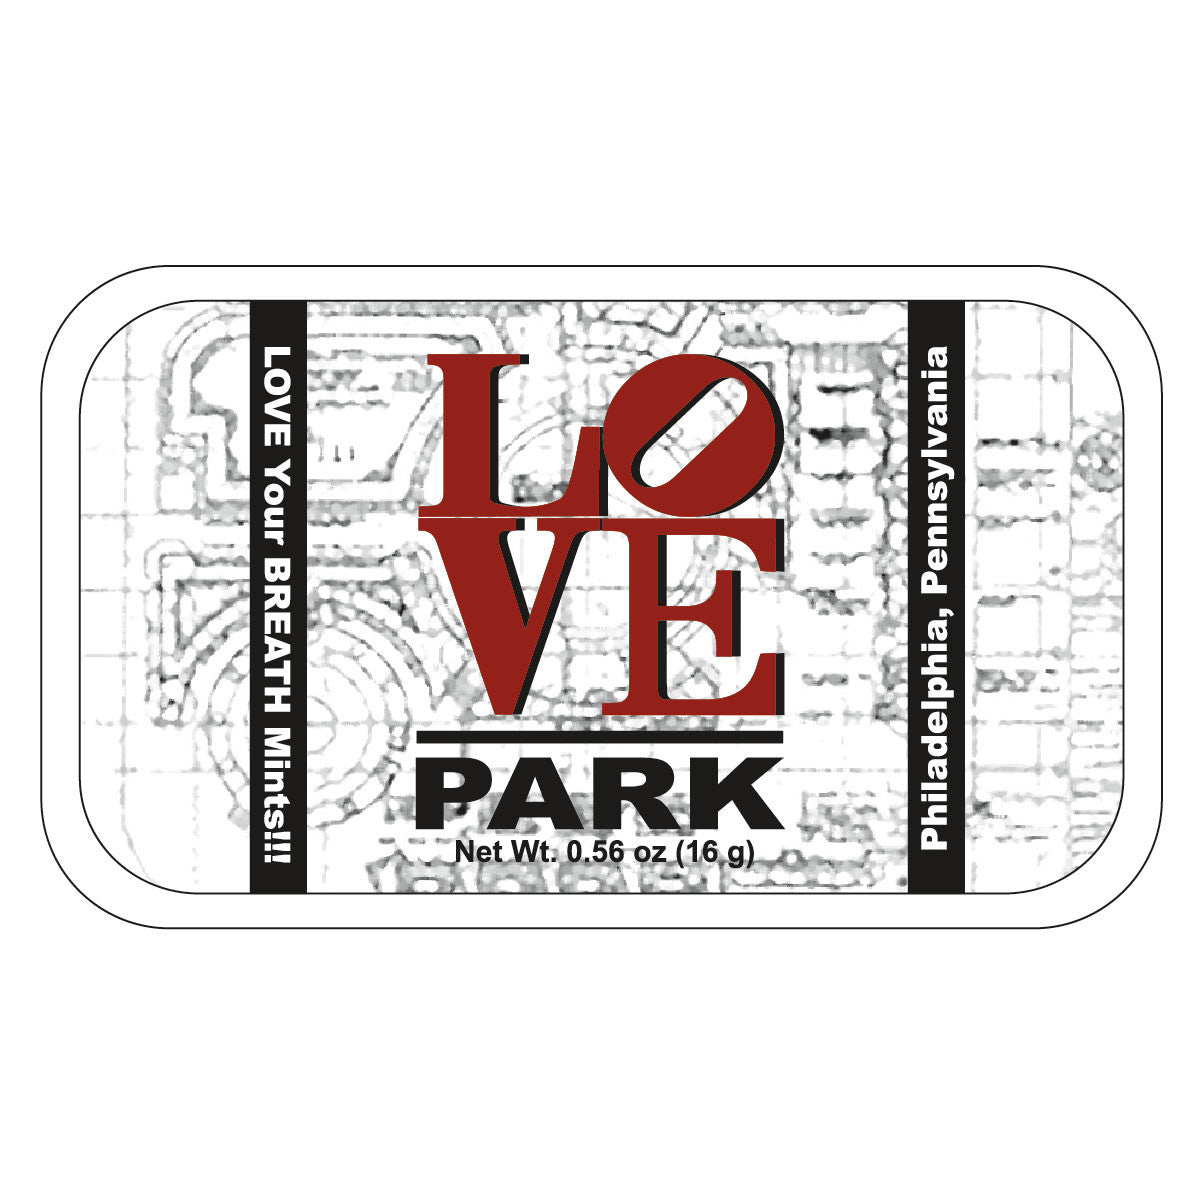 Love Park Map - 1028S